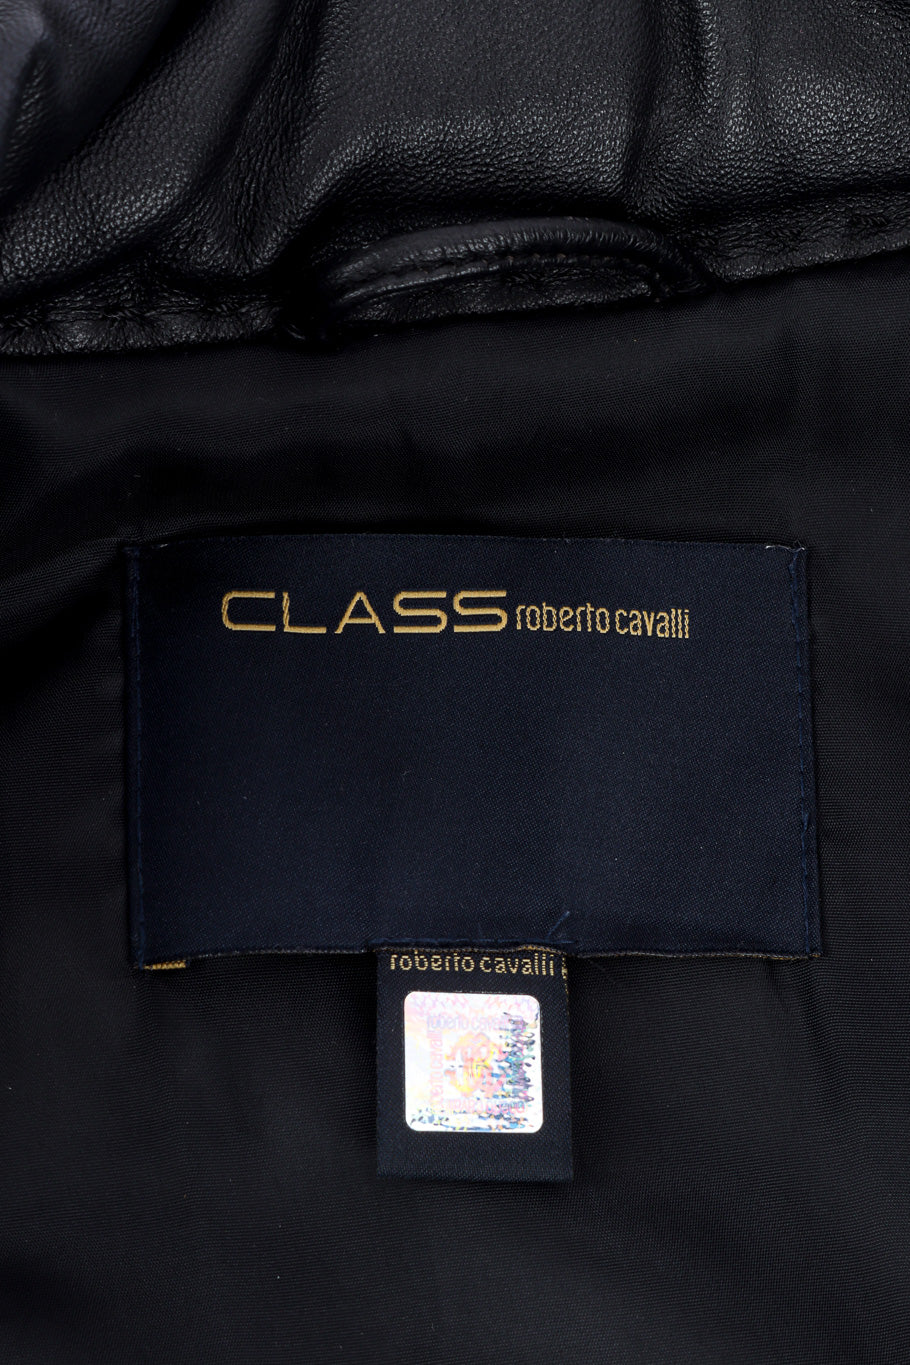 Class Roberto Cavalli Studded Leather Trench Coat signature label closeup @recessla